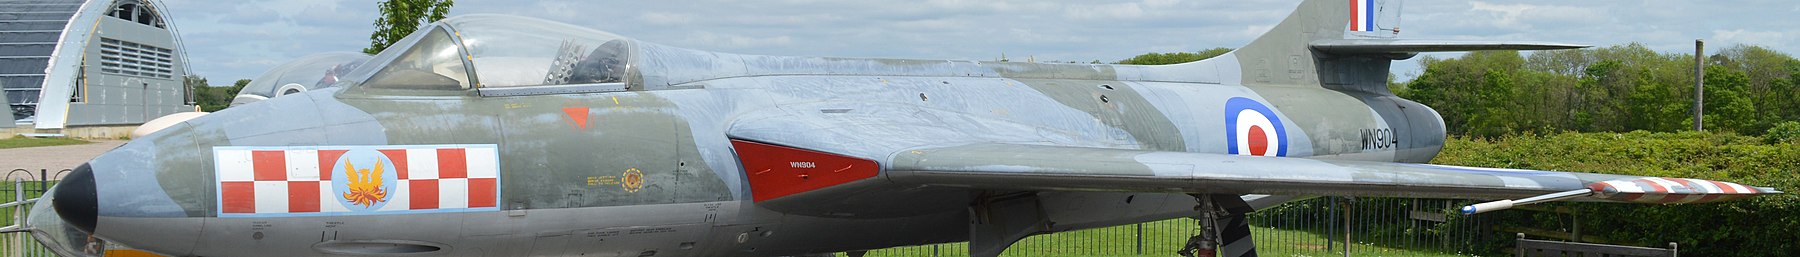 Wellingborough banner Sywell Aviation Museum Hawker Hunter F.2.jpg